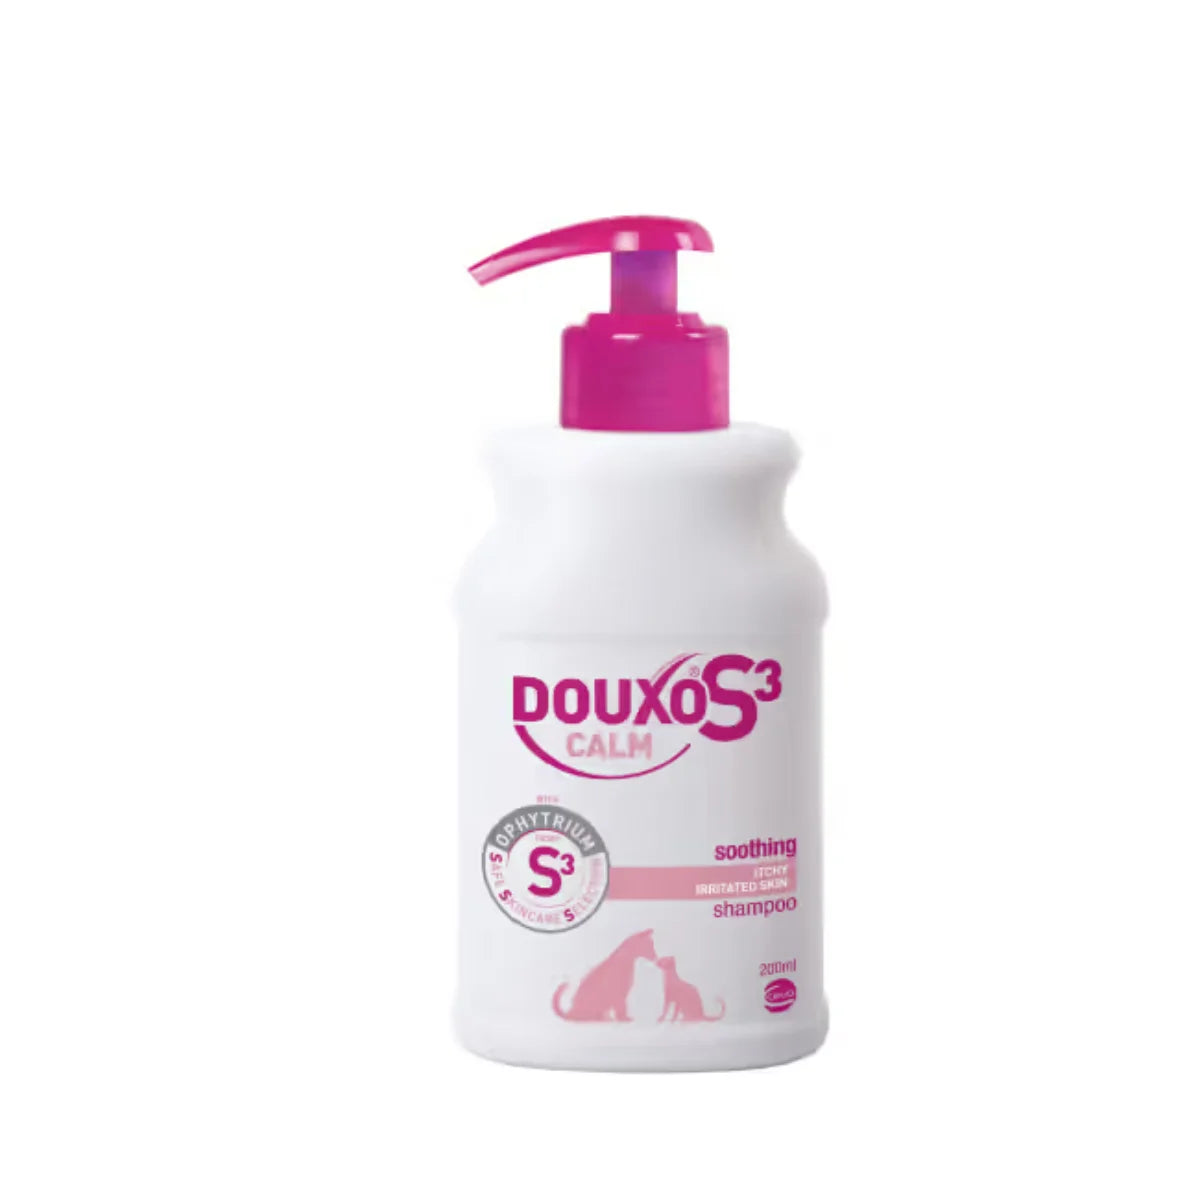 DOUXO S3 - Calm Shampoo 200ml